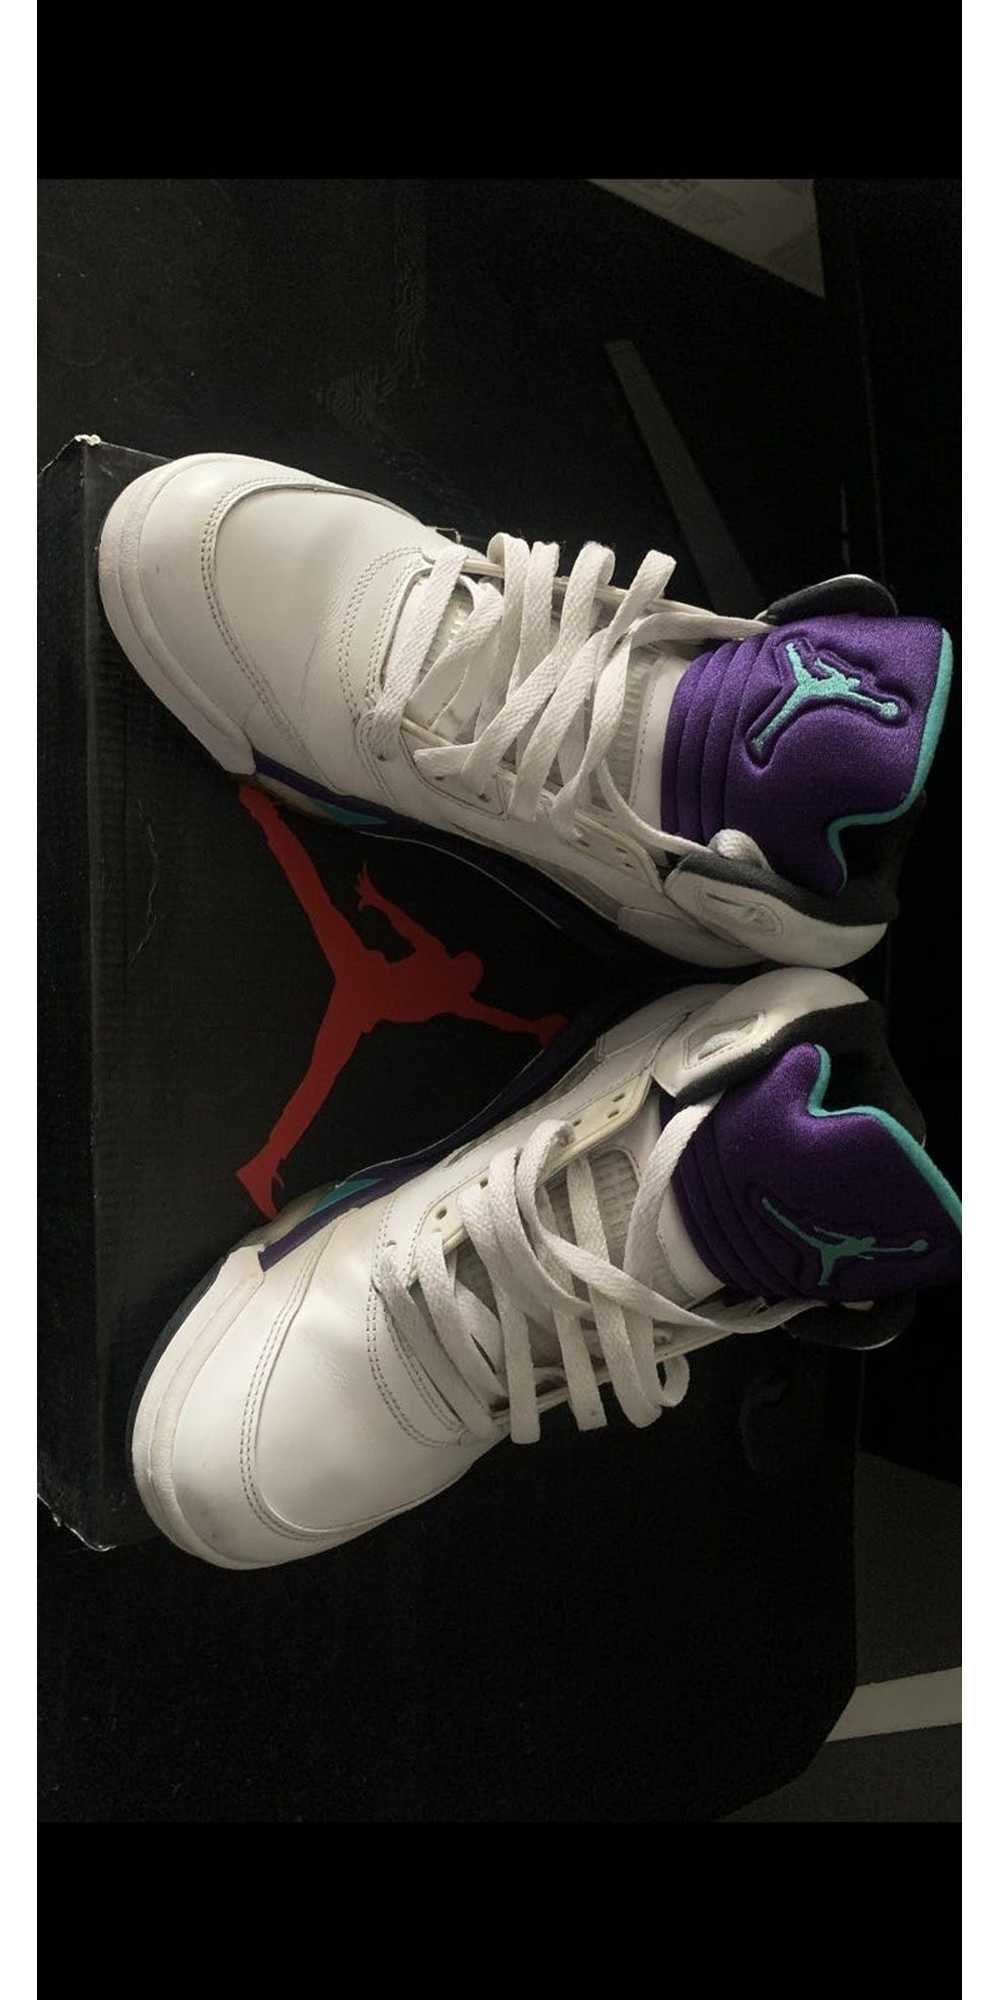 Sneakers Release – Jordan 5 Retro “Alternate Grape” Grape  Ice/New Emerald